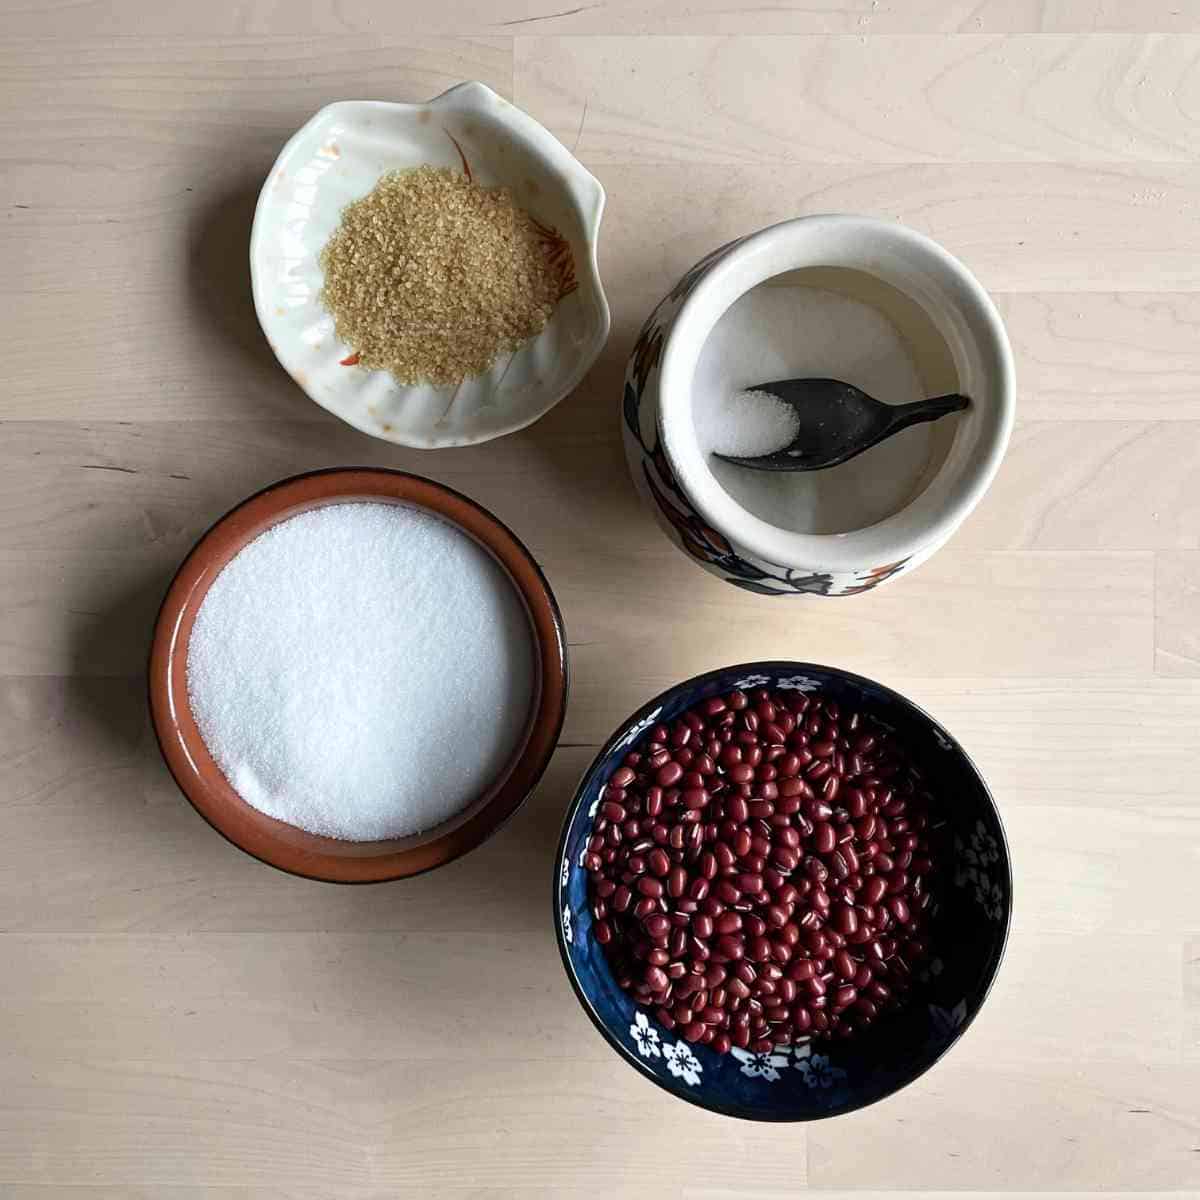 Anko red bean paste ingredients